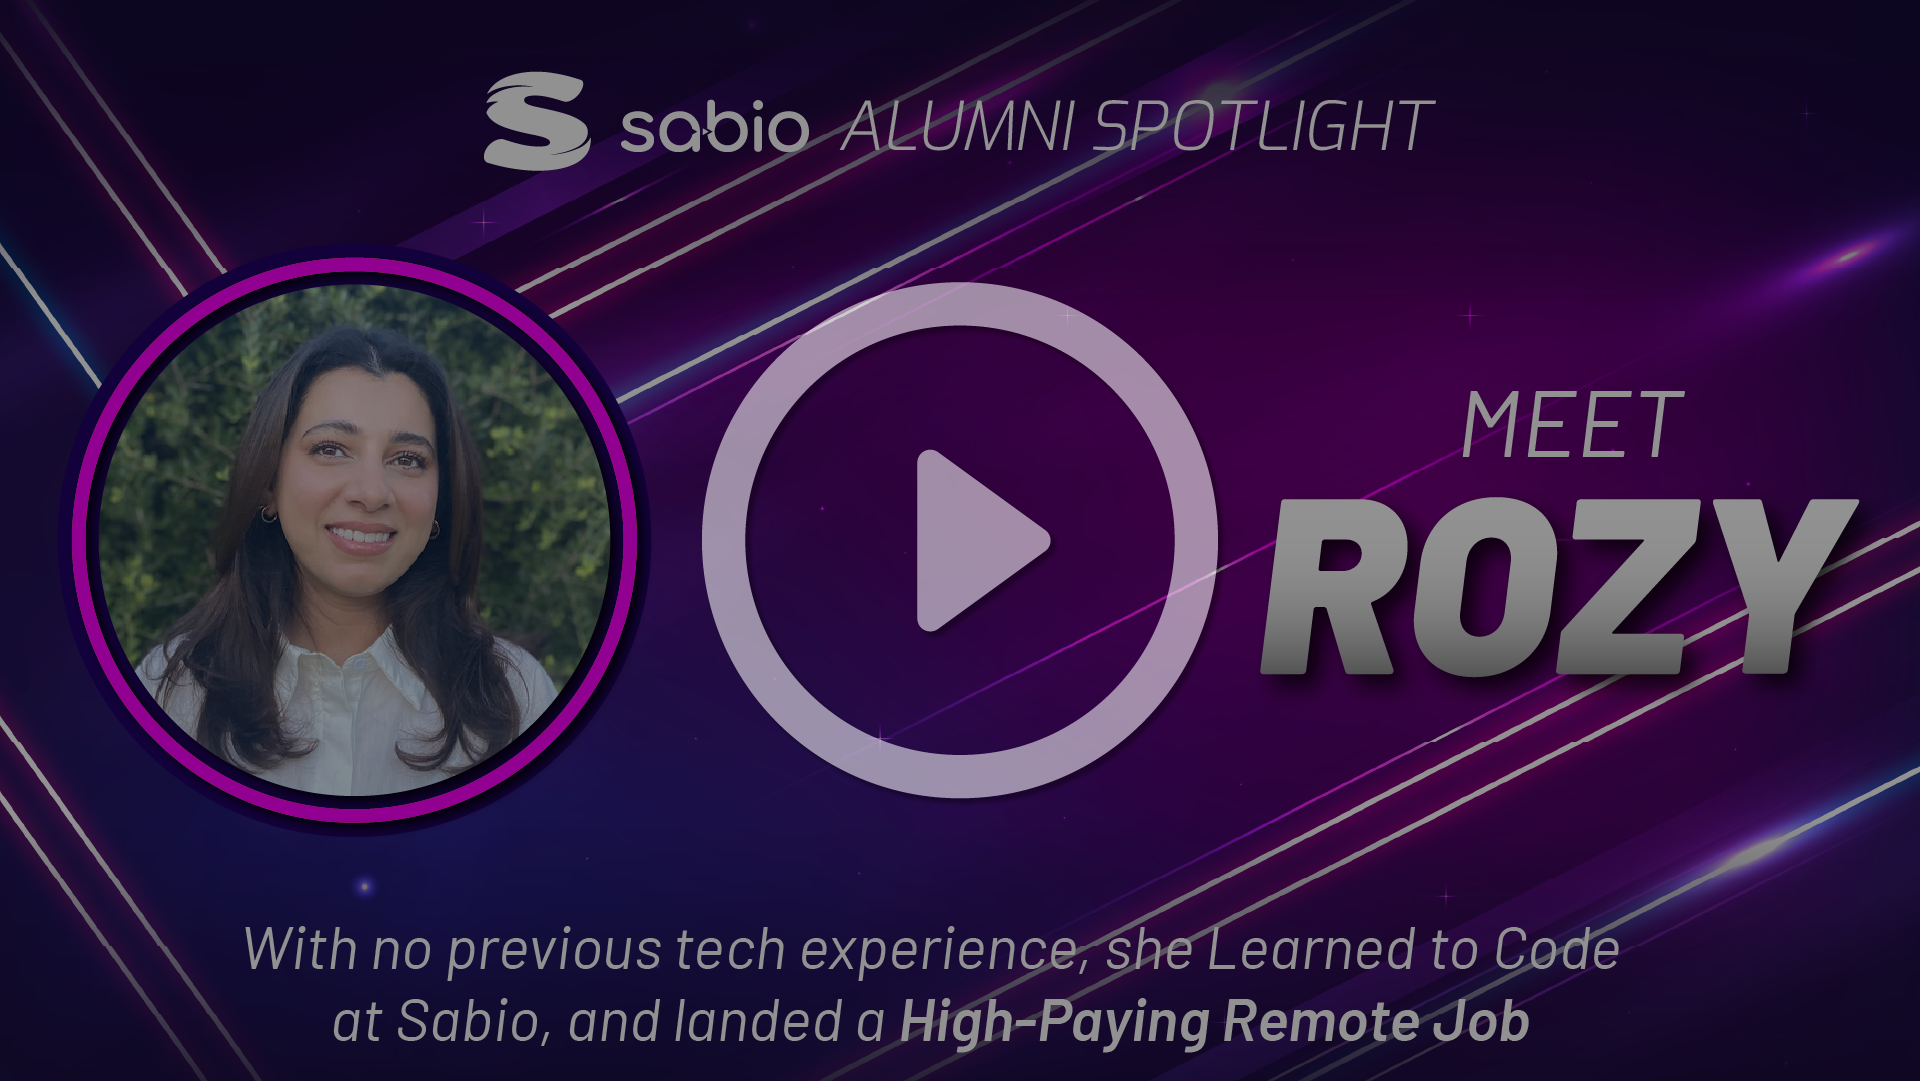 Sabio Alumni Spotlight: Rozy. Play symbol overlaid to the image.